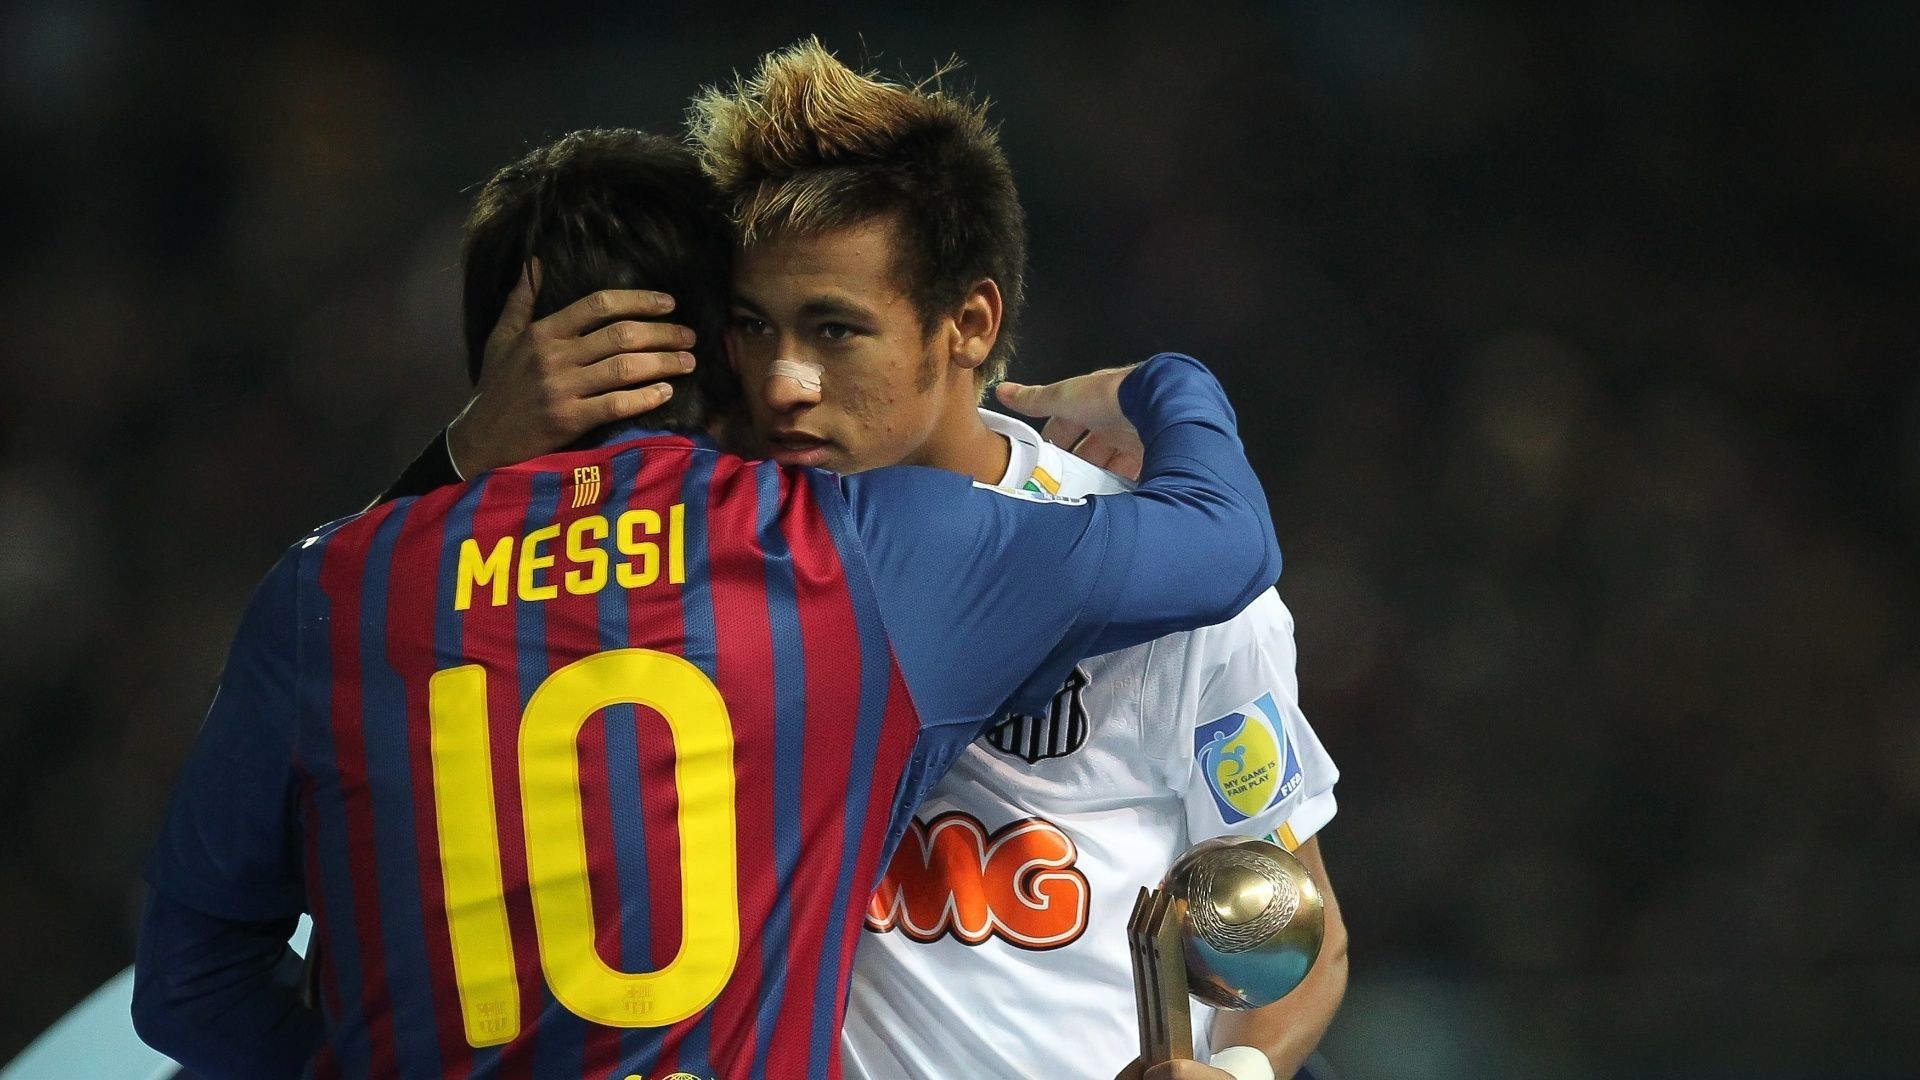 Messi and Neymar Wallpaper .pavbca.com